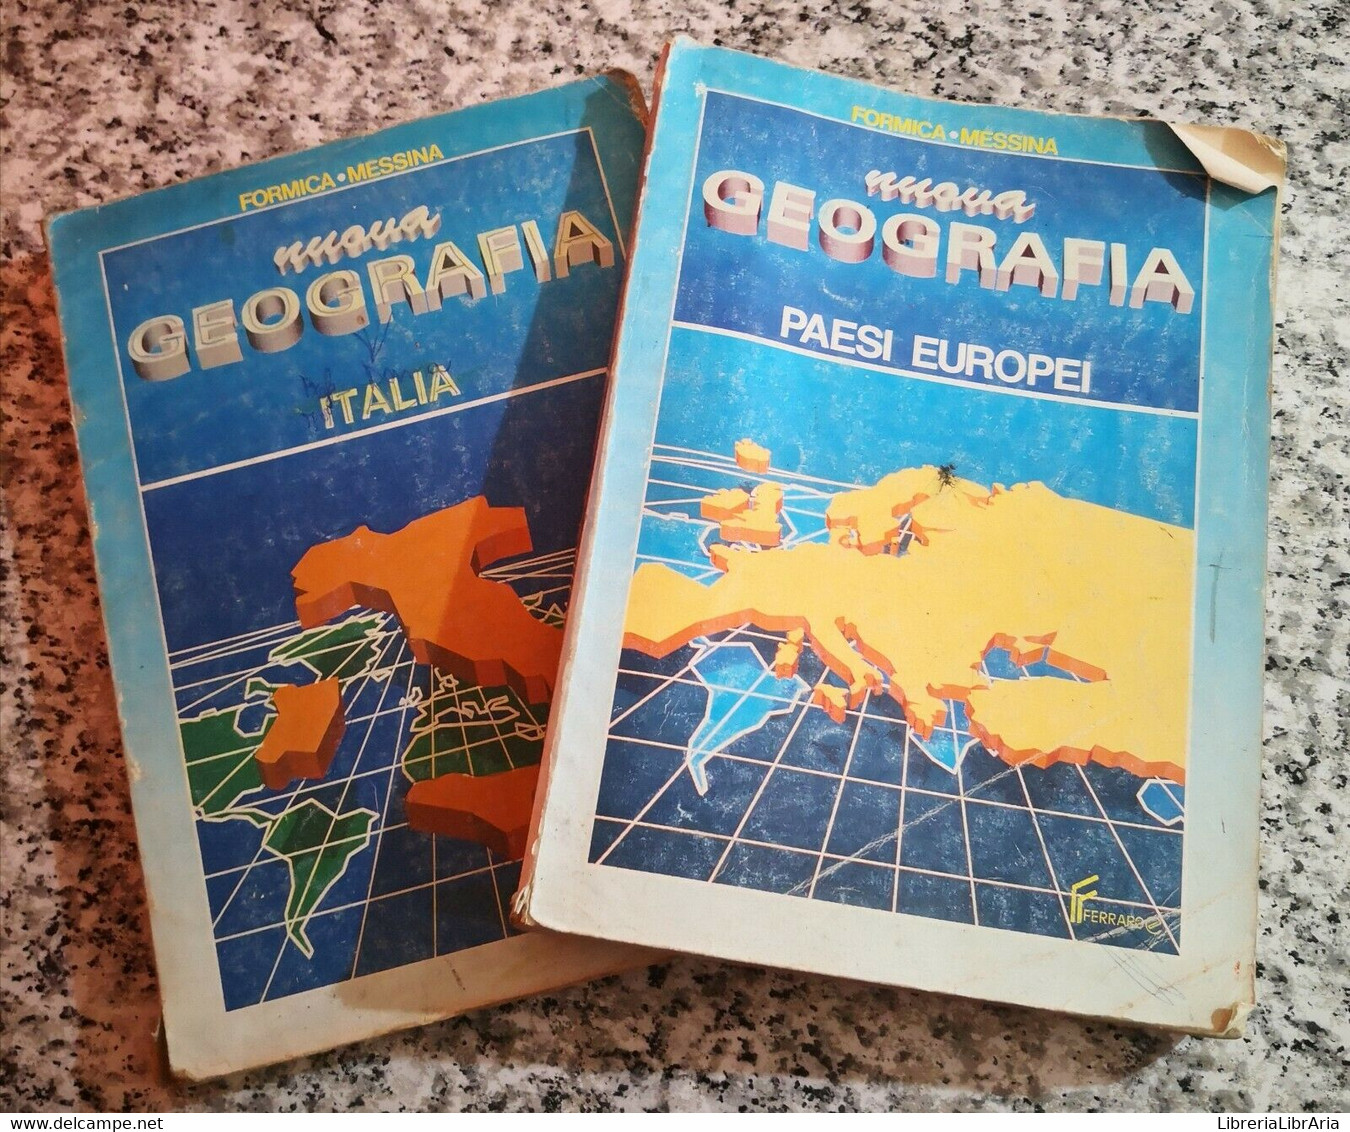 Nuova Geografia Vol 1 Italia, Vol 2 Paesi Europei Di C.formica S.messina, 1992-F - Histoire, Philosophie Et Géographie